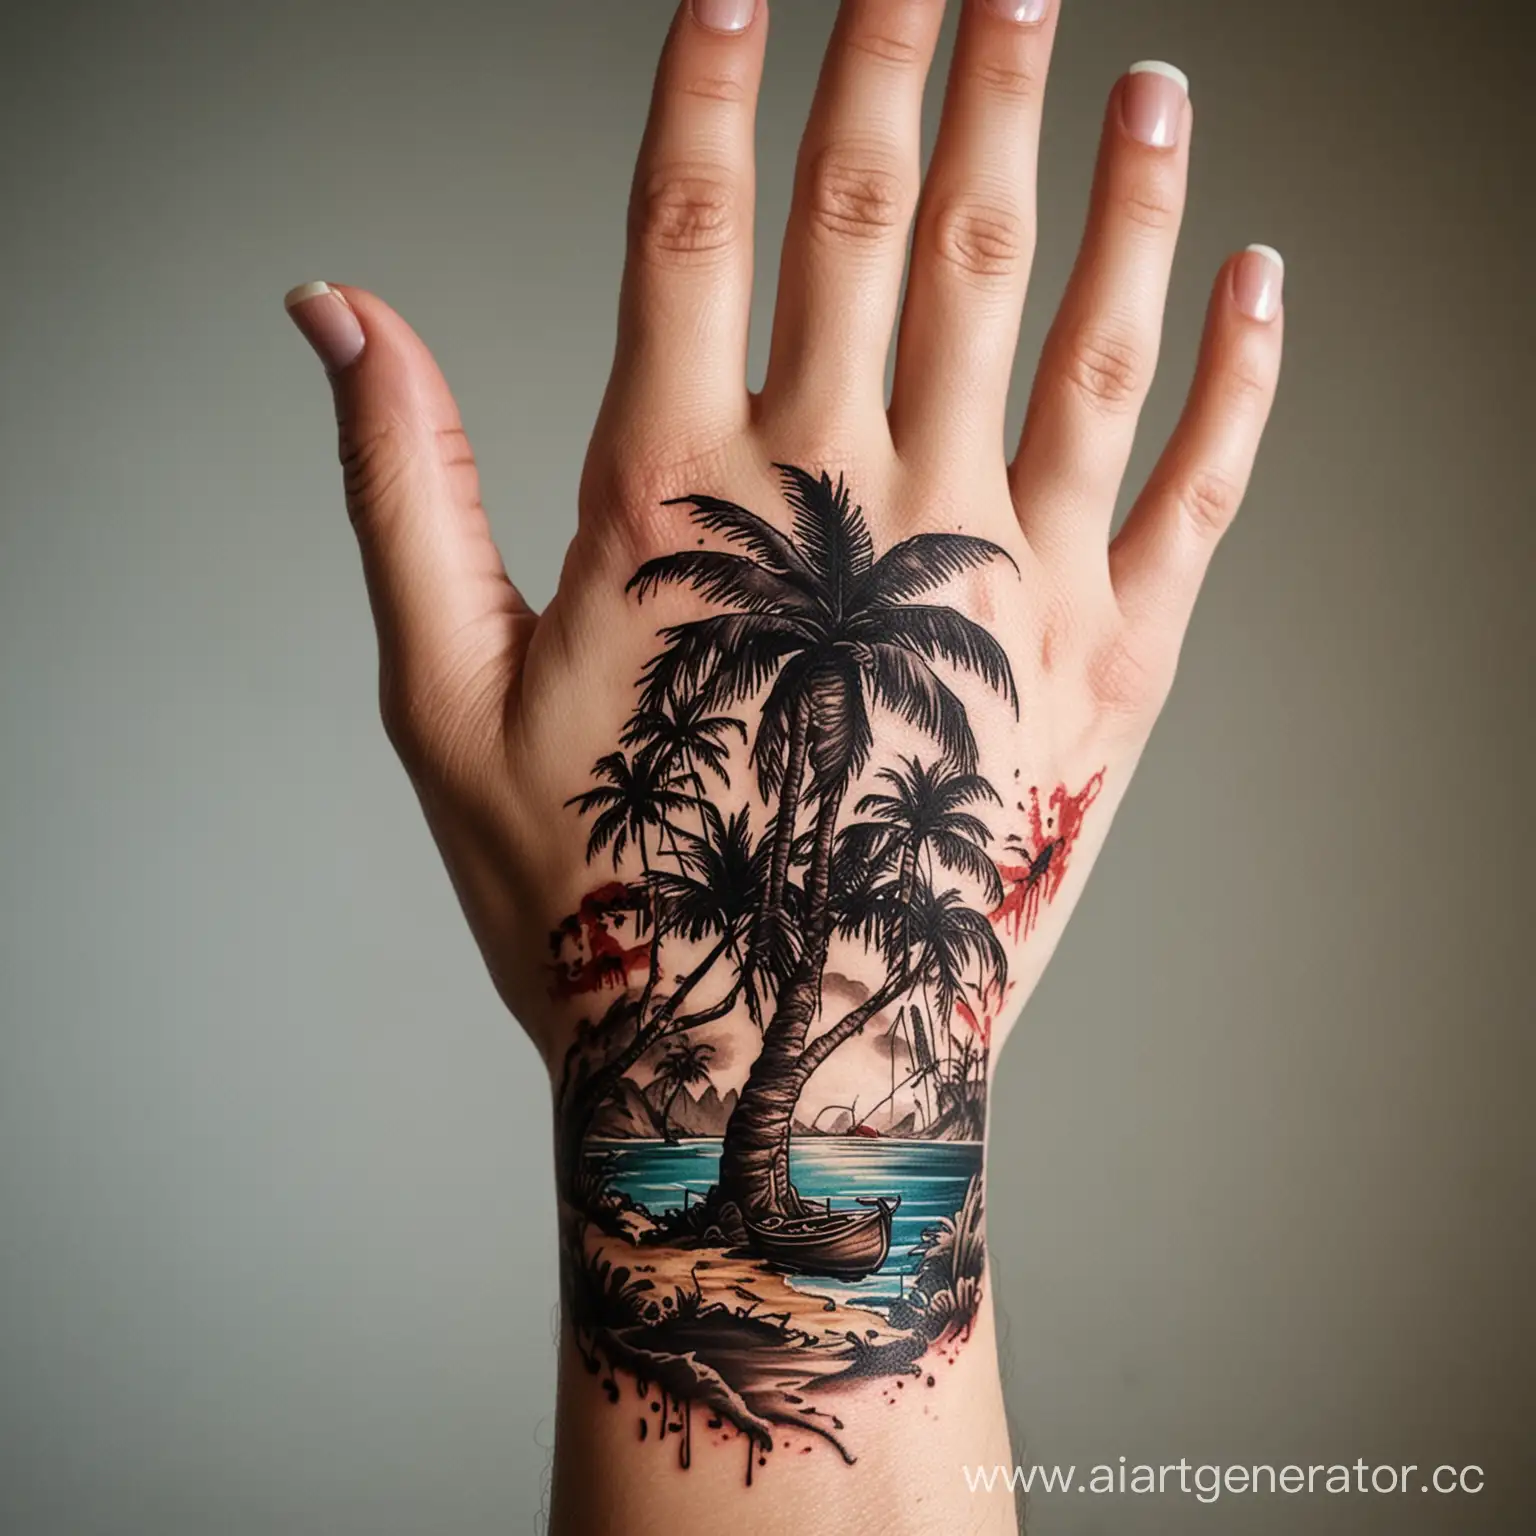 Татуировка на кисти руки по тематике "Dead Island 2"
